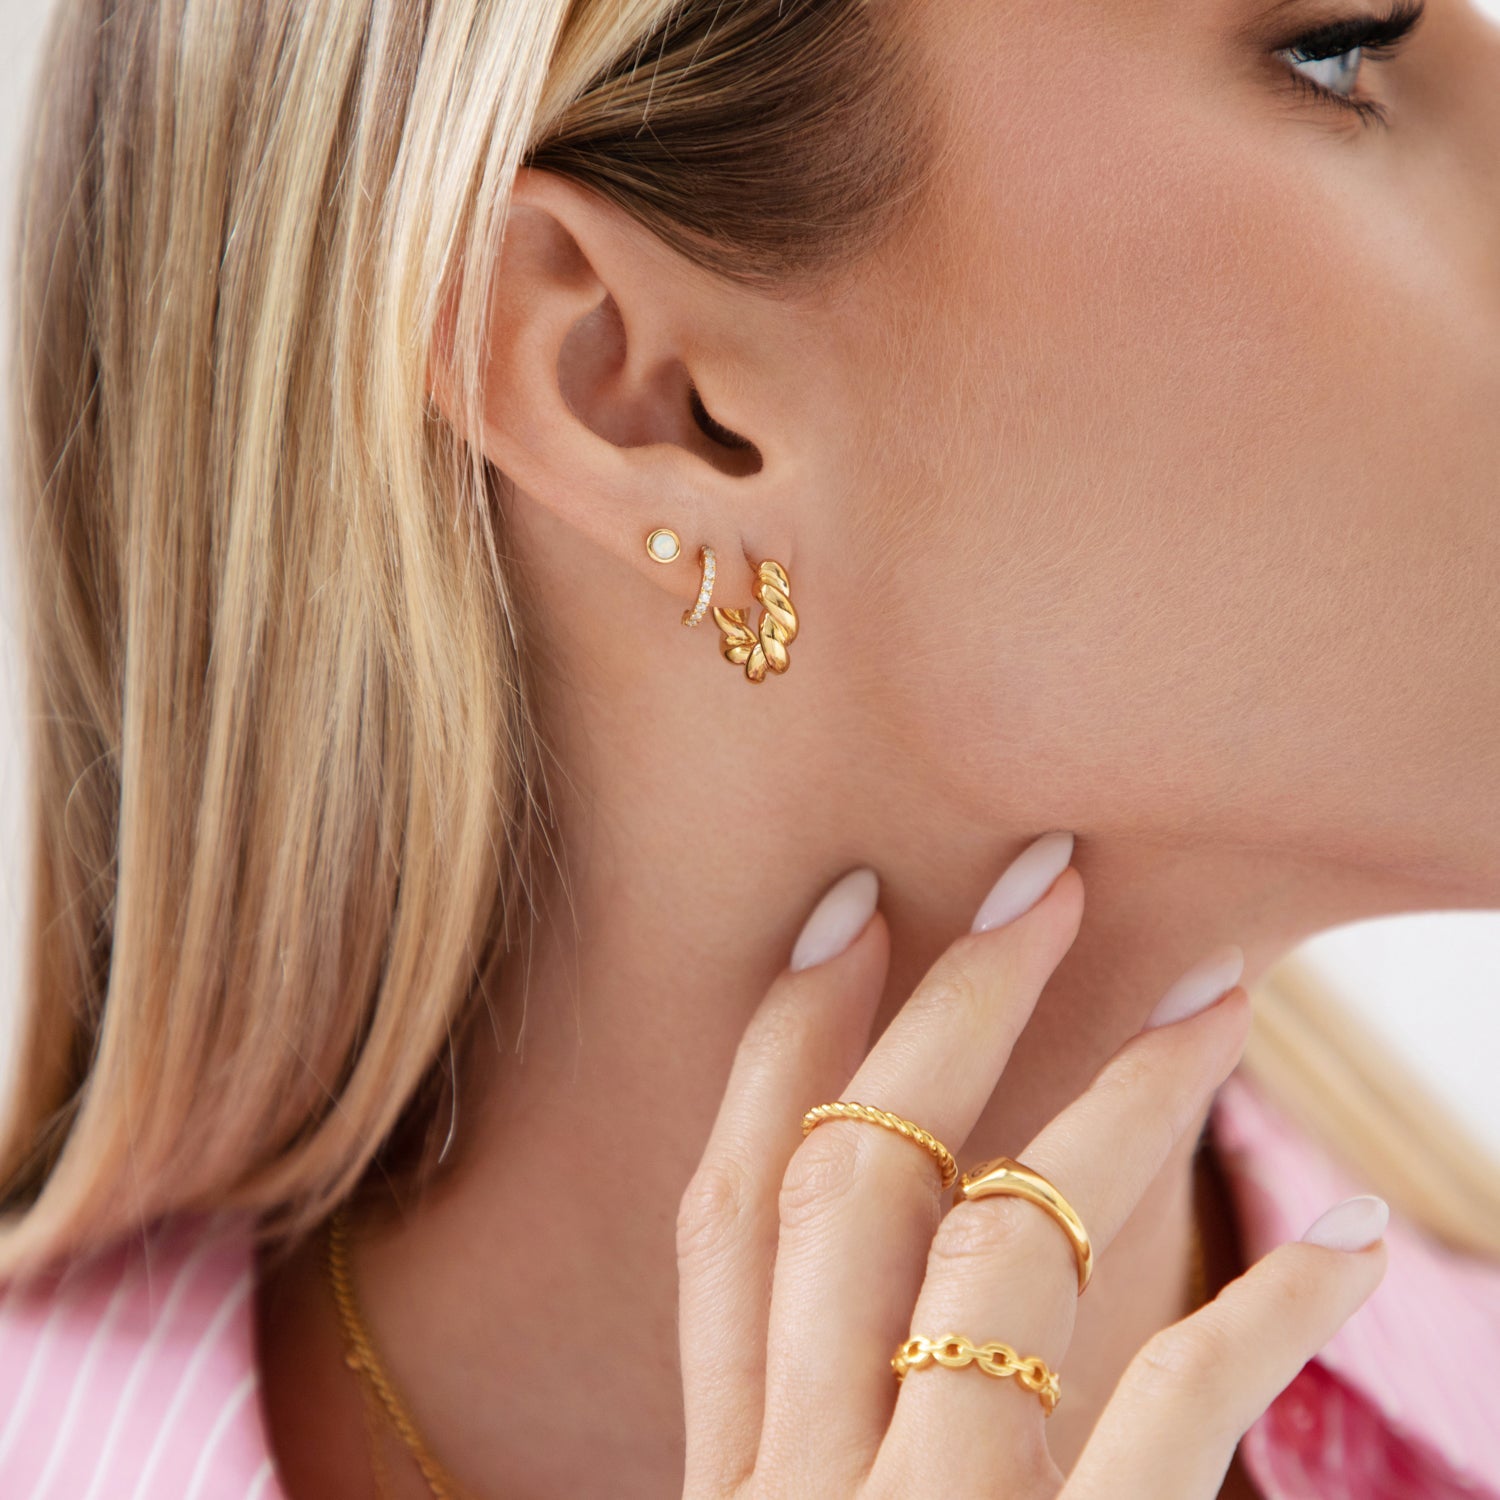 22k Real Dubai Gold Plated Hoop Jhumka Earrings / Small Hoop Earrings Gold  / Hoop Jhumki Small / Slim Sleek Indian Bridal Gold Hoop Earrings - Etsy | Hoop  earrings small, Dubai gold jewelry, Etsy earrings